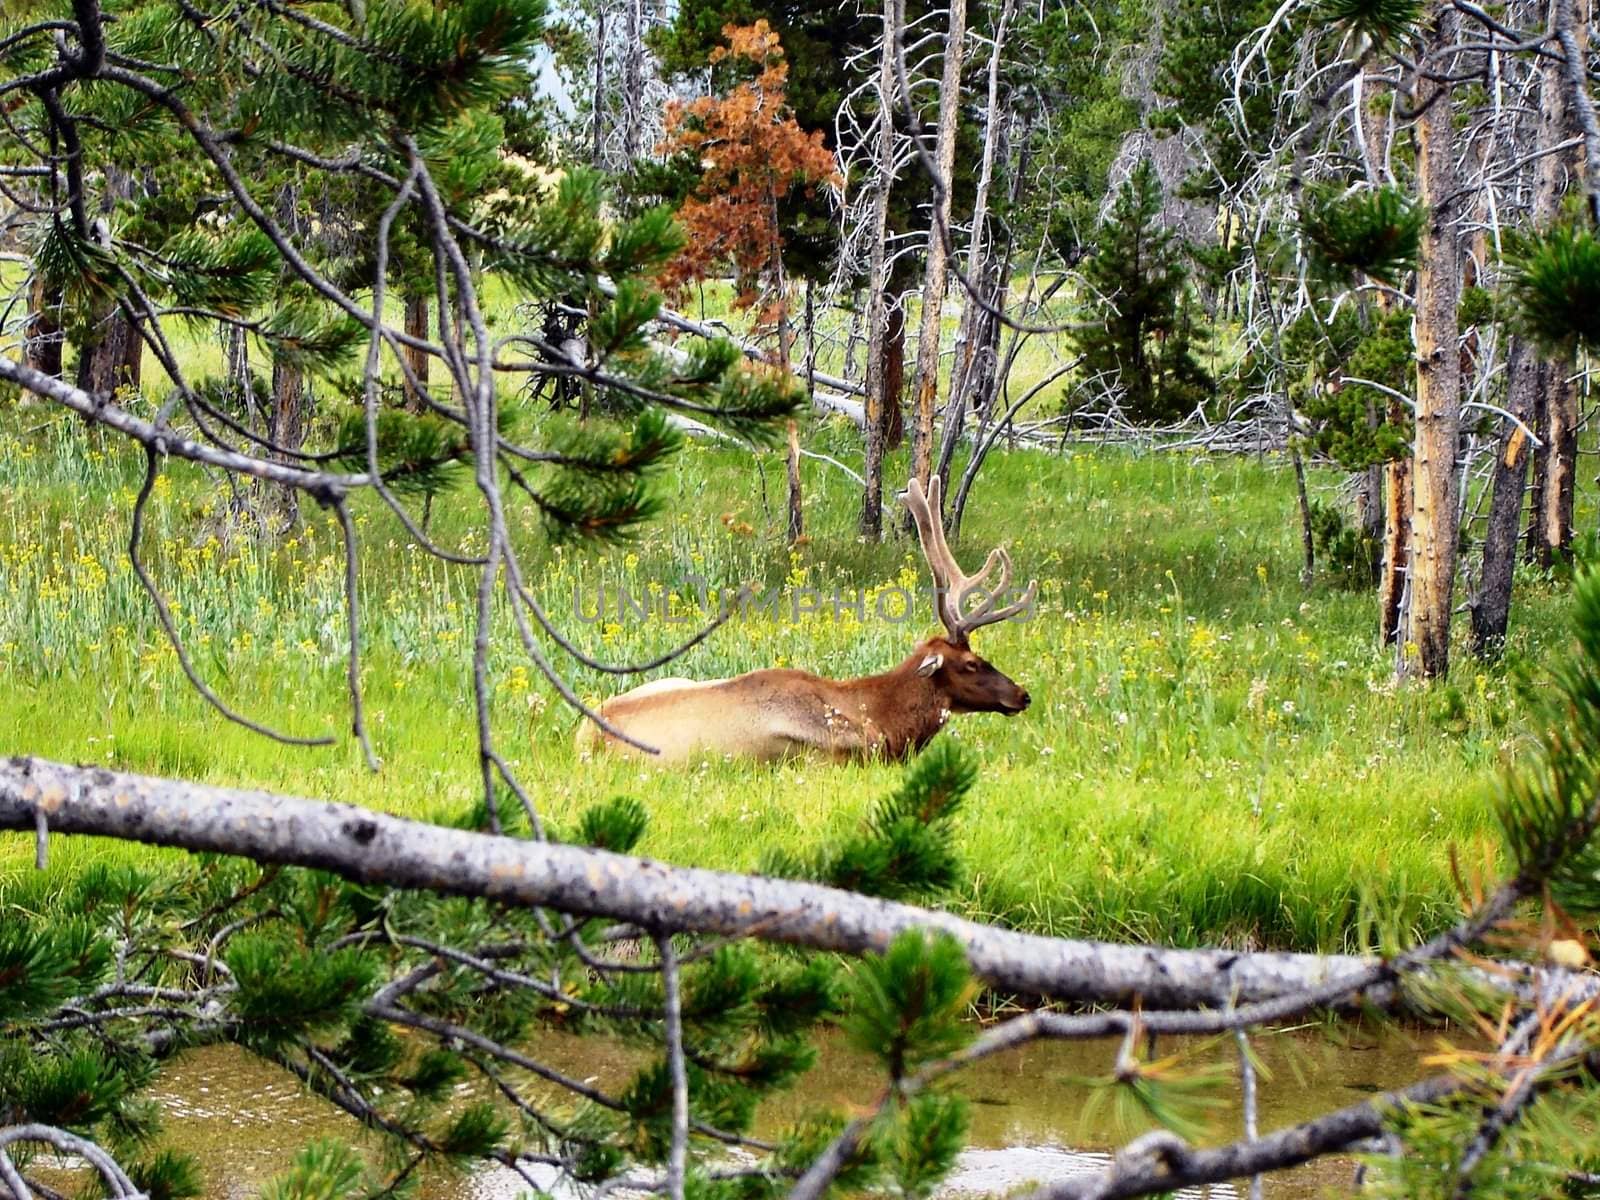 Moose in the woods by RefocusPhoto